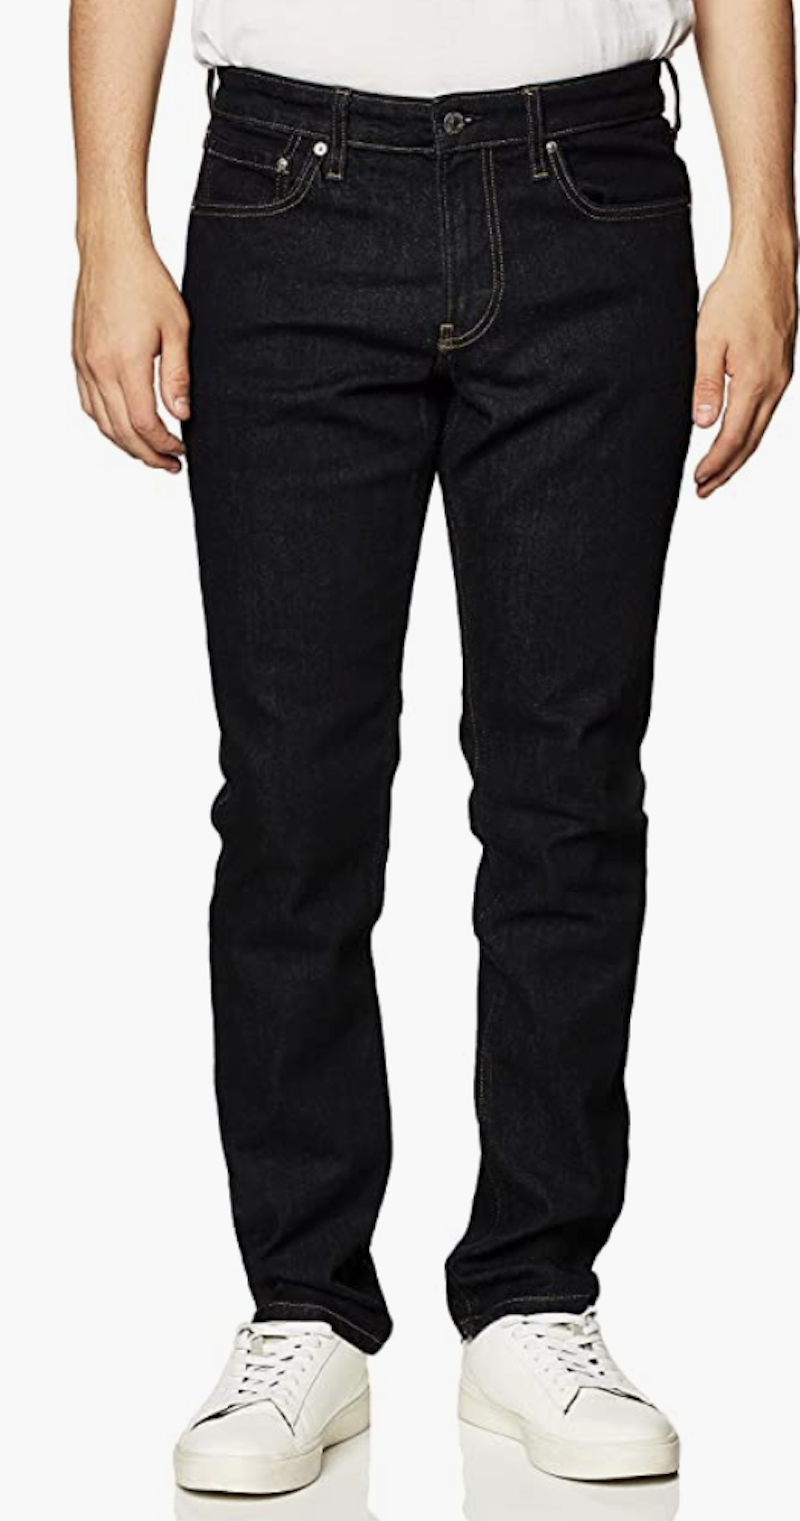 Mens New 2 Styles Striped Sport Jeans For Men Unique Design Slim